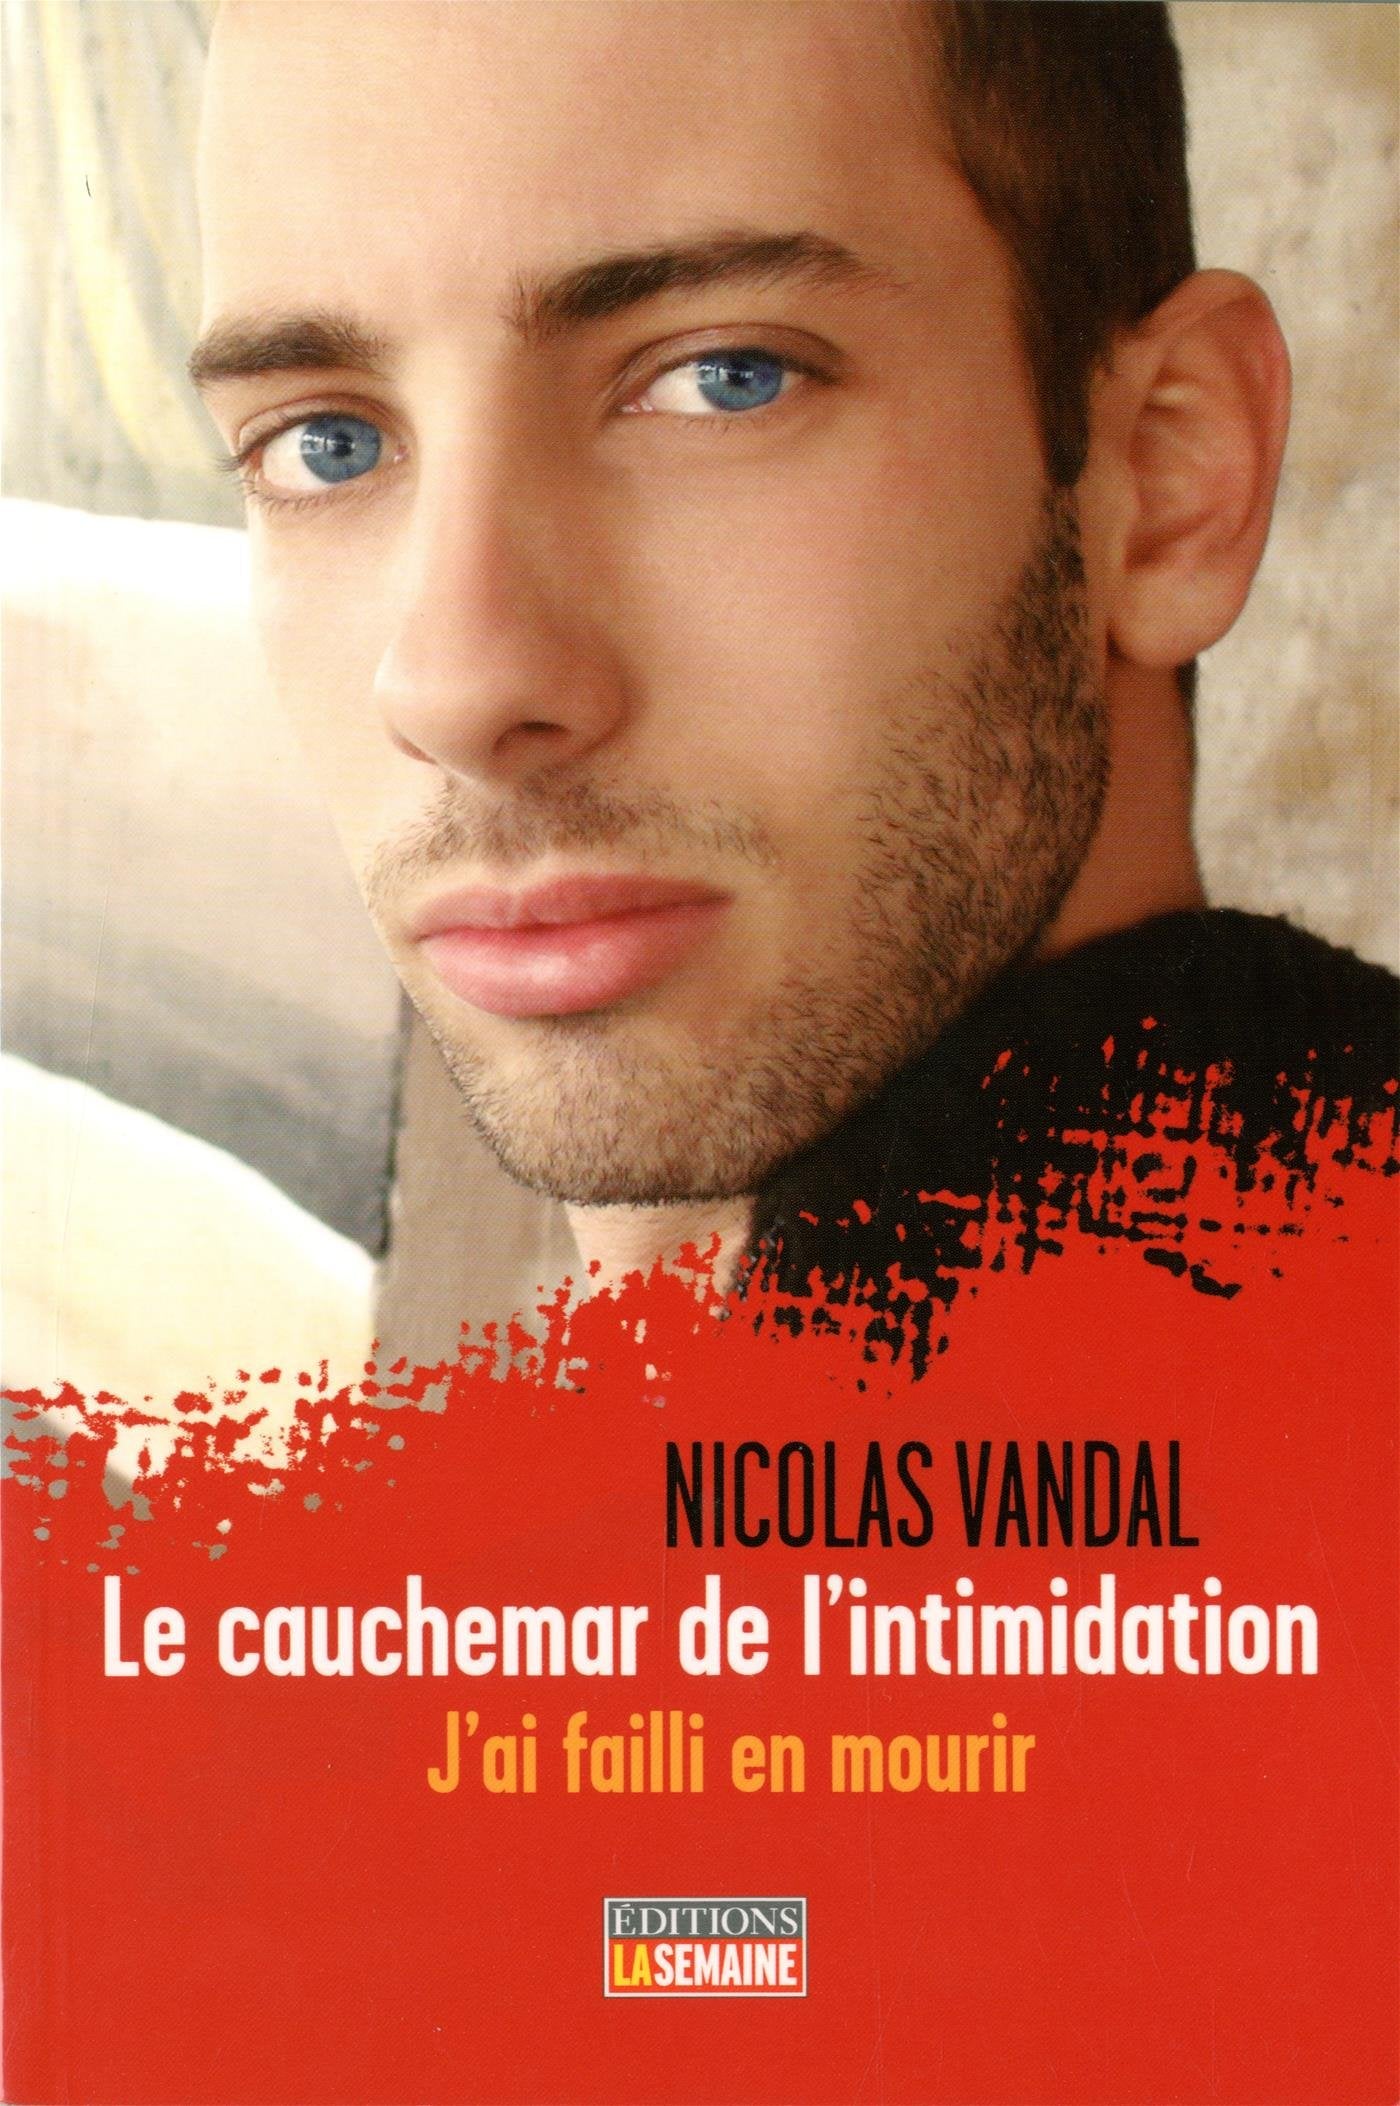 Livre ISBN 2897030992 Le cauchemar de l'intimidation: J'ai failli en mourir (Nicolas Vandal)